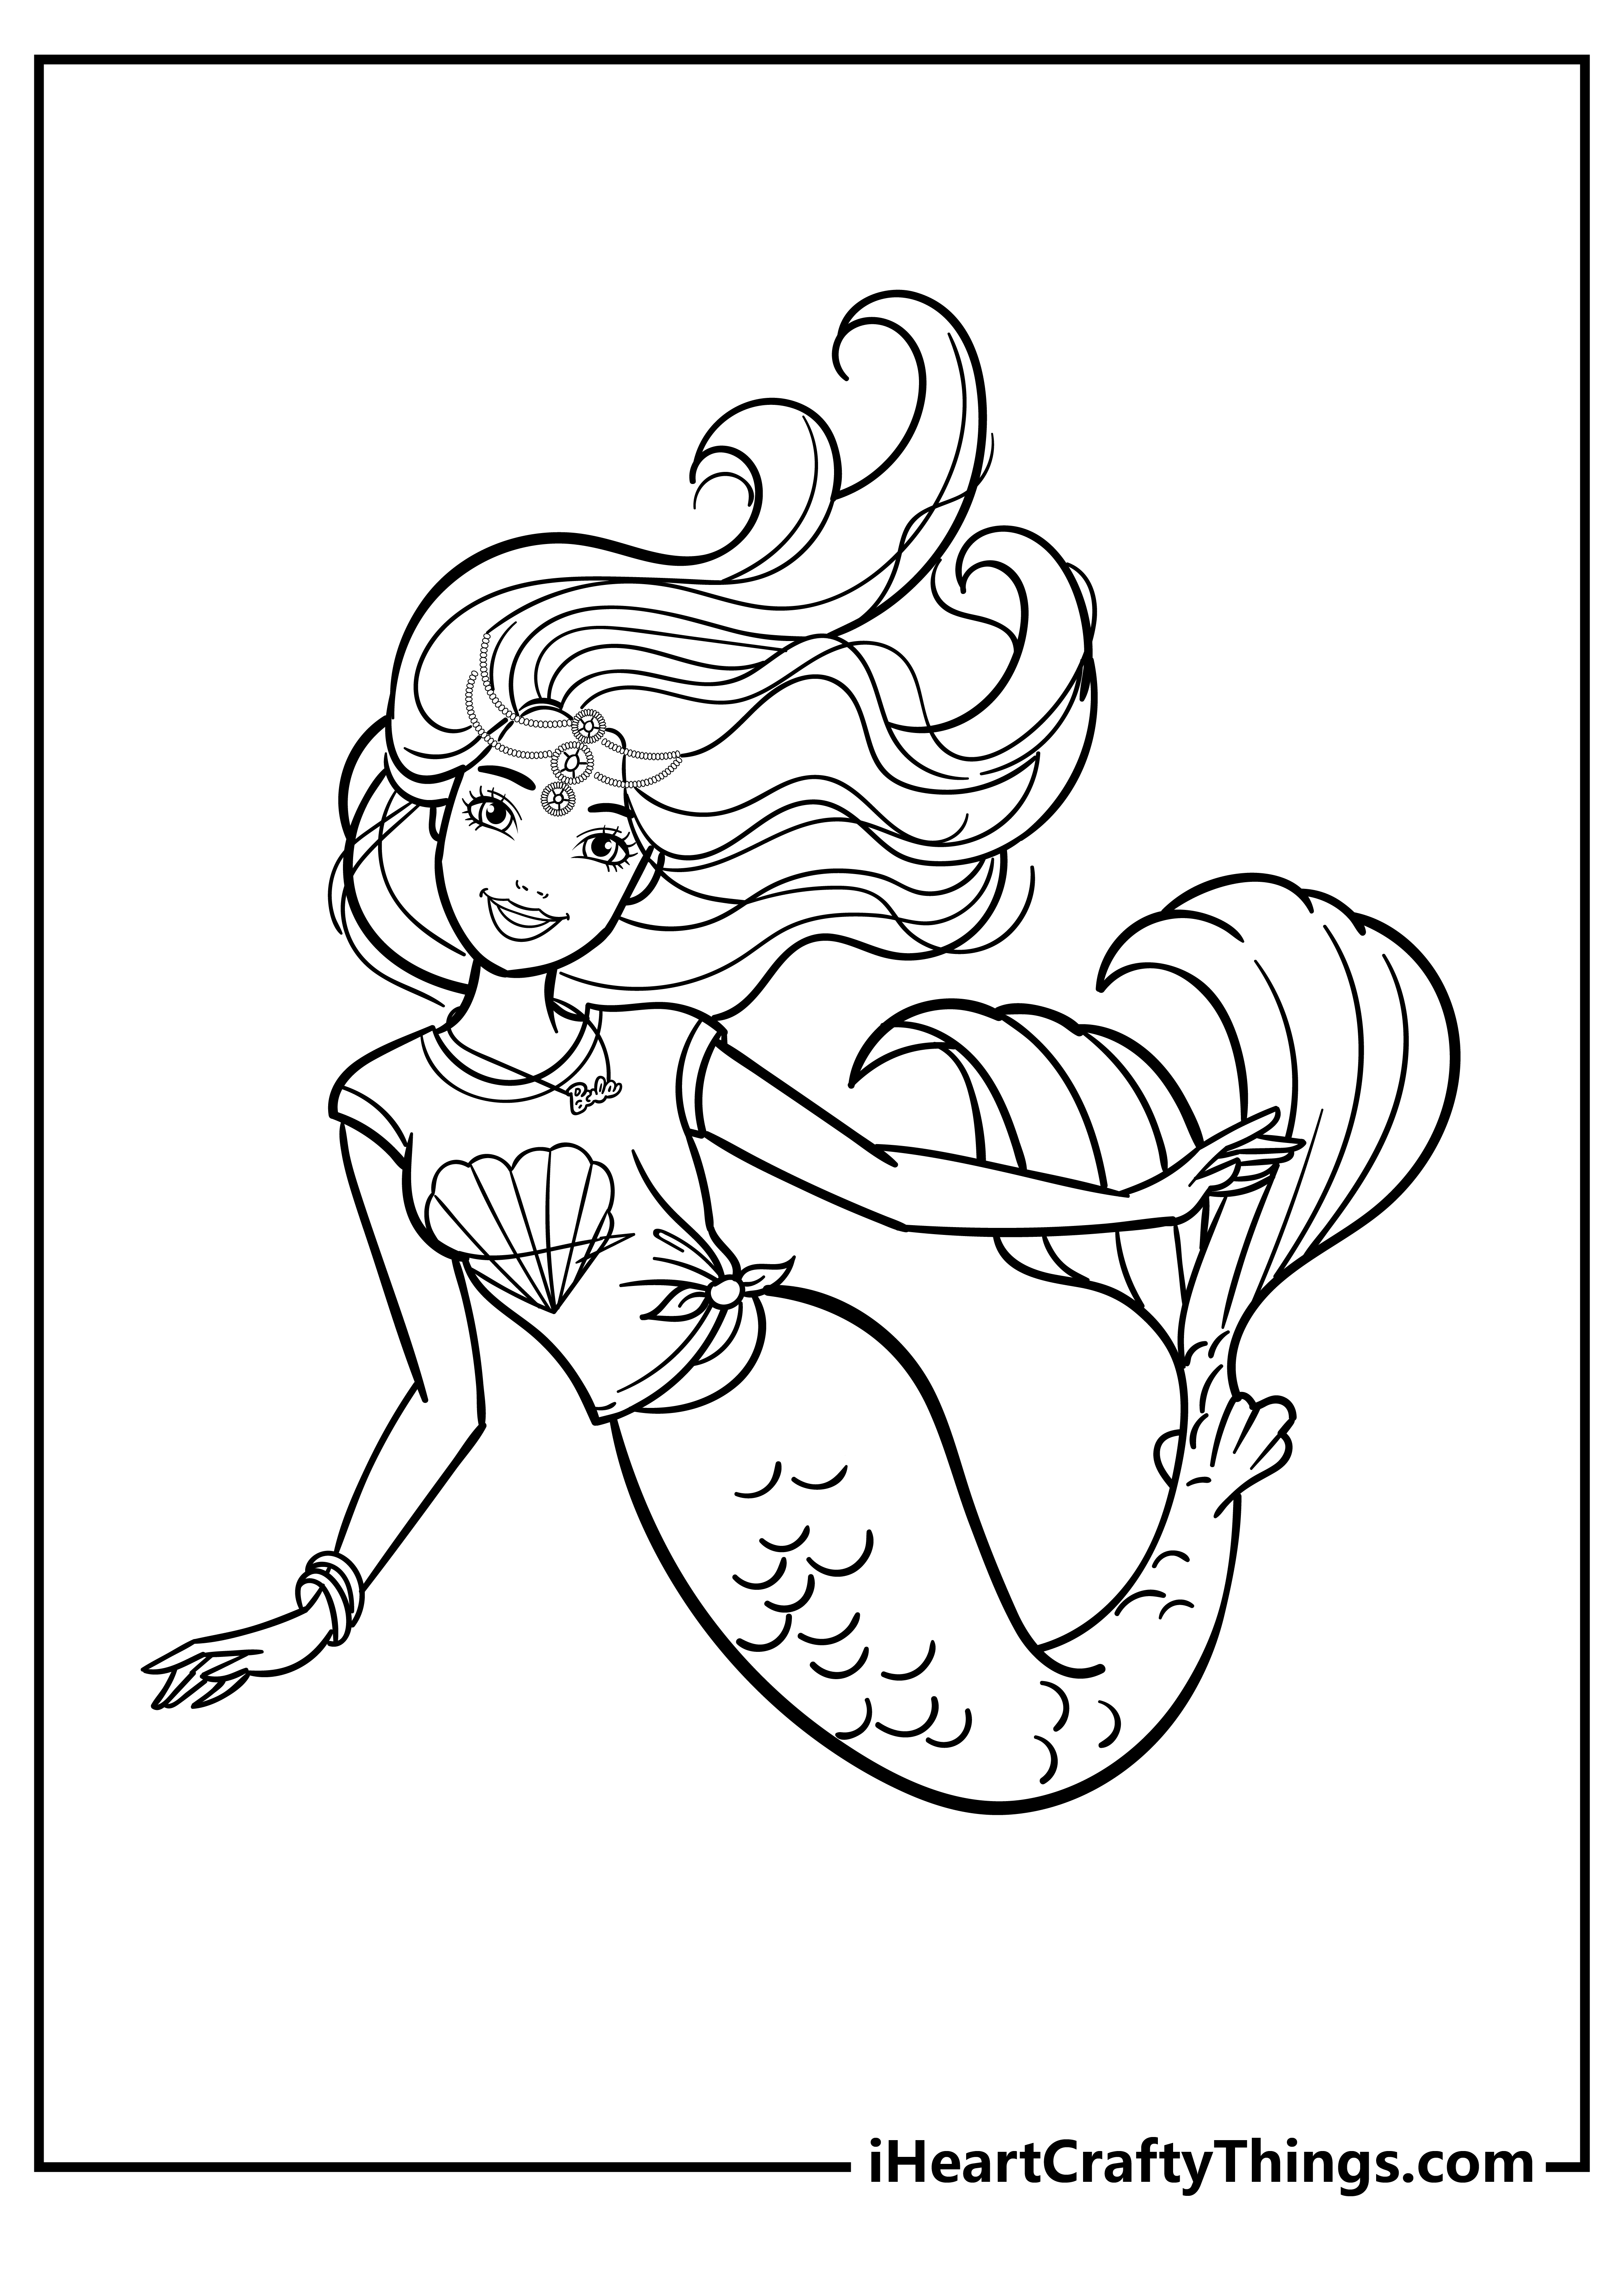 Barbie Mermaid Coloring Sheet for children free download